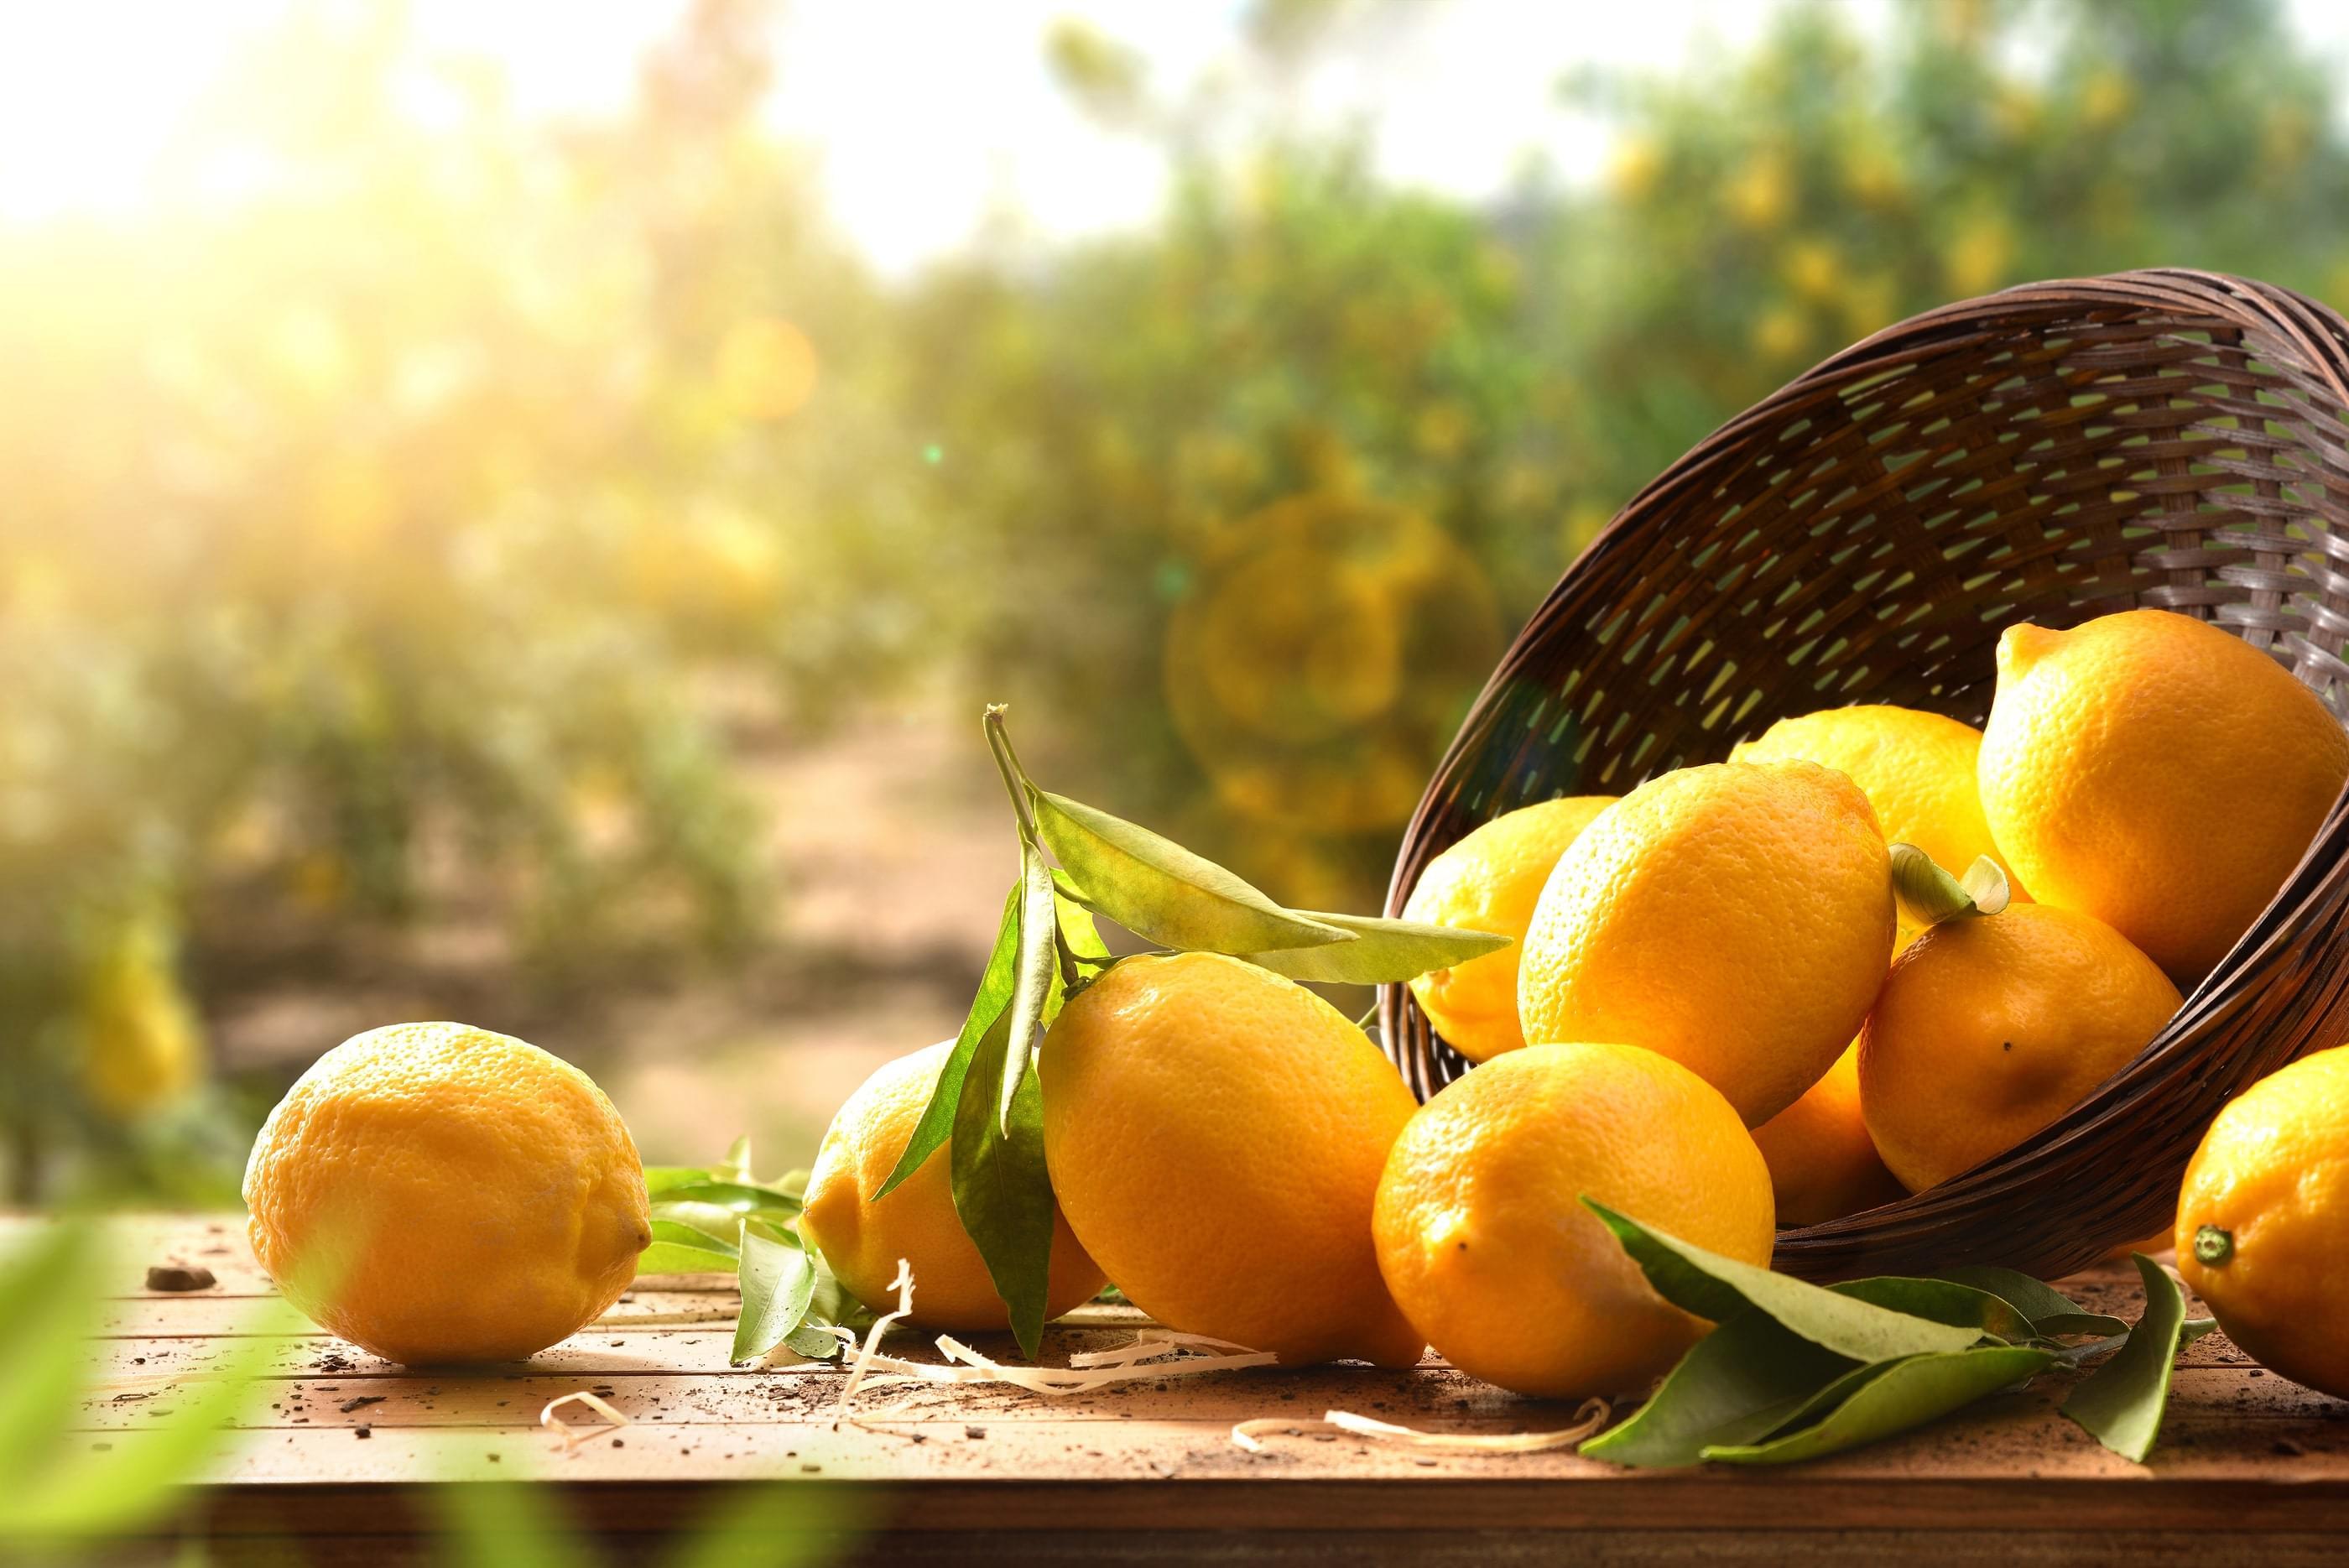 A basket spilling freshly harvested lemons onto a table in the sun